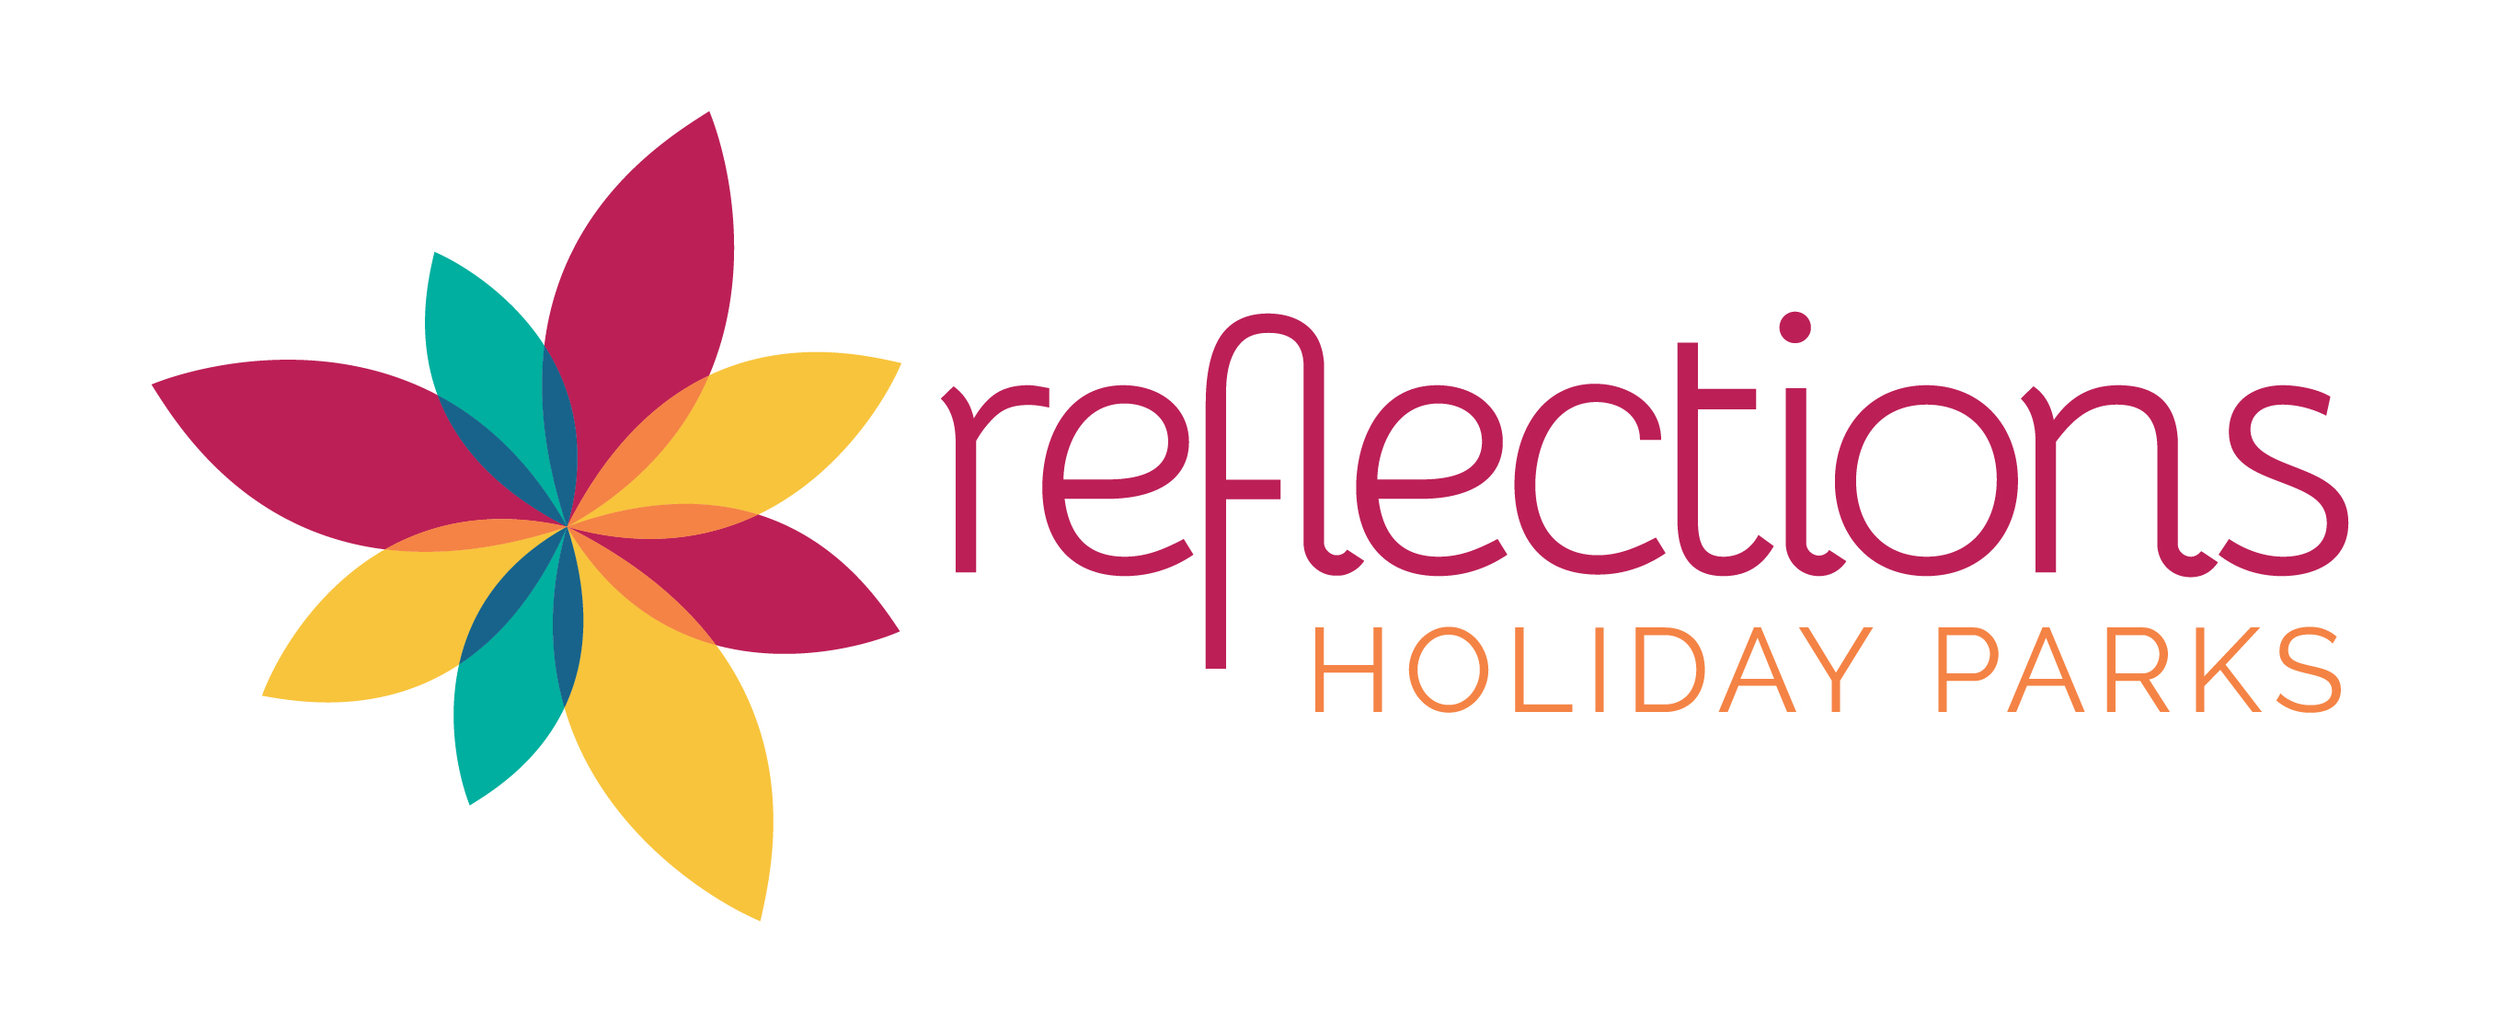 reflections_holidayparks_logo.jpg